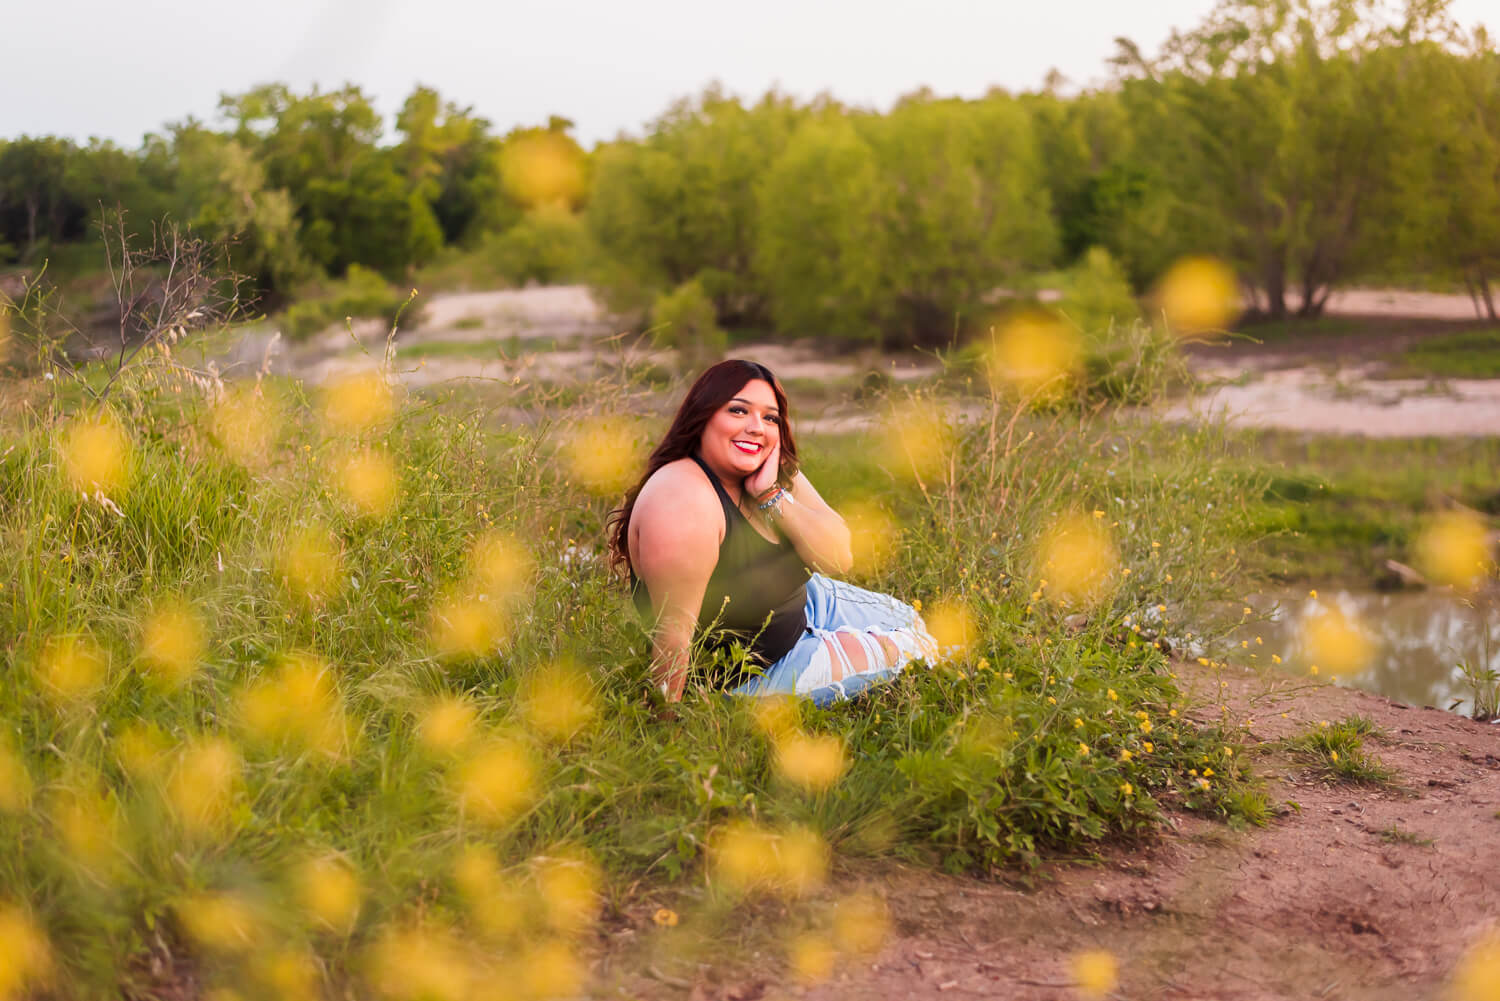 del valle high school senior sitting in yellow flowers for her high school senior photoshoot